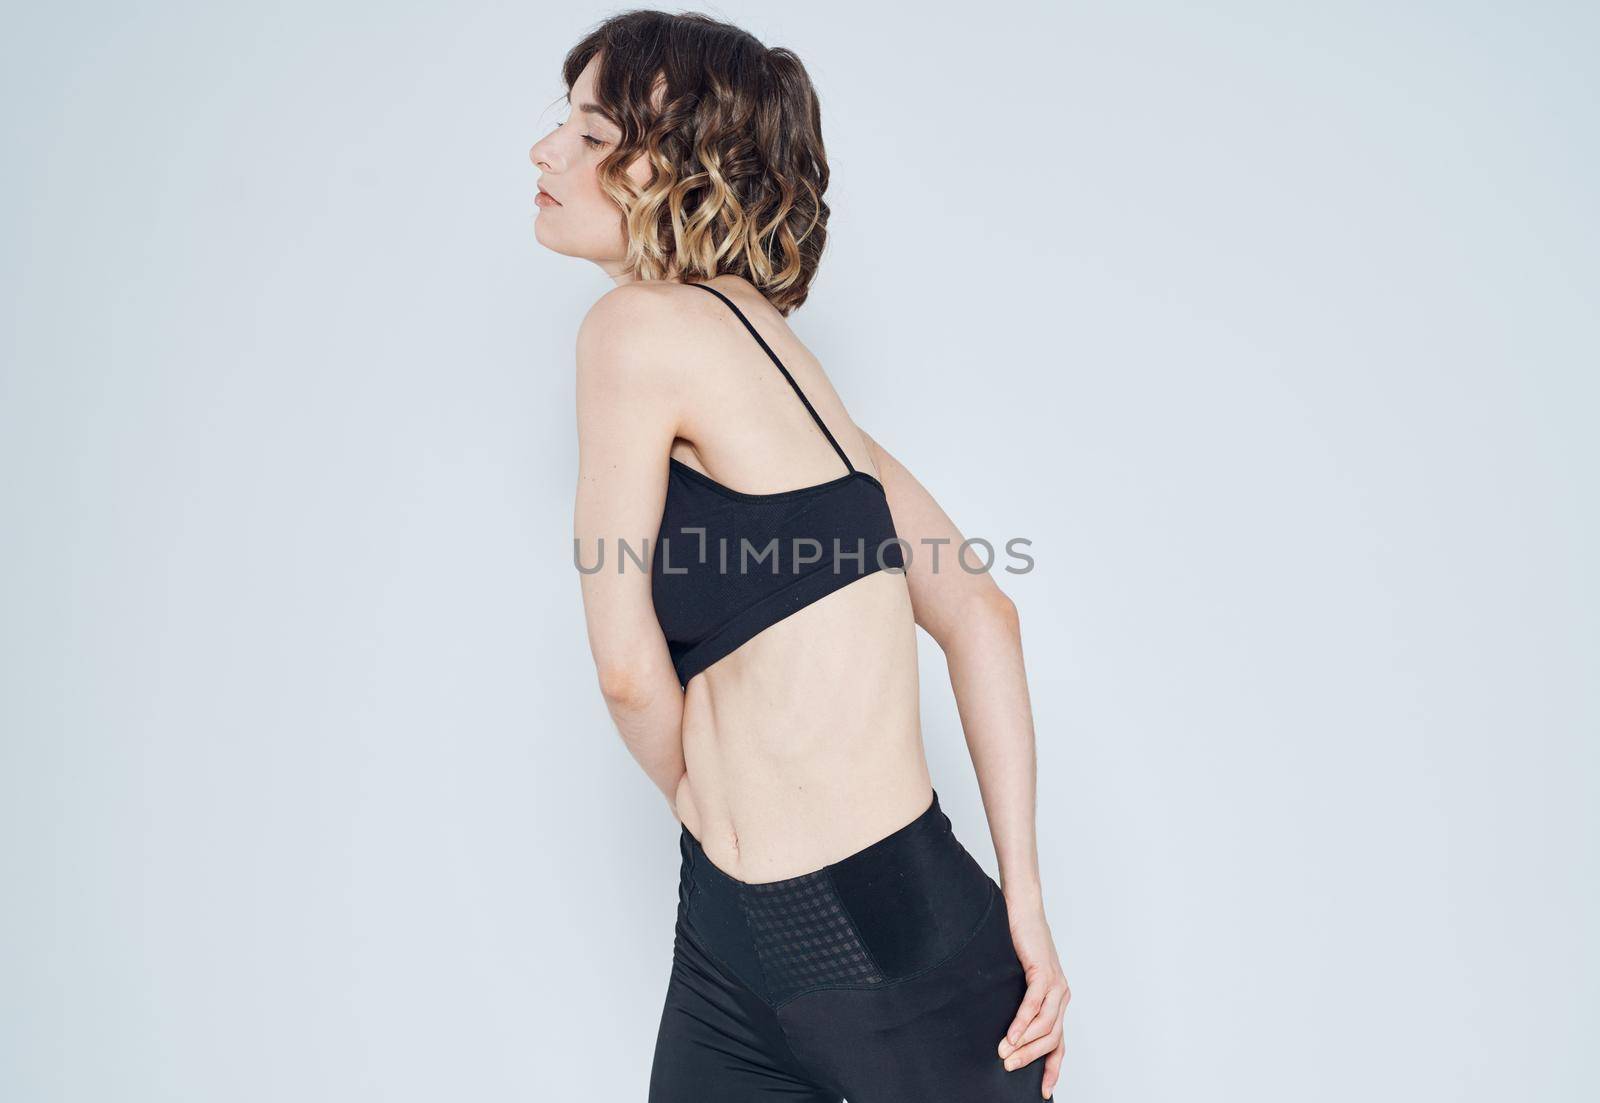 sports woman fitness yoga meditation model light background. High quality photo